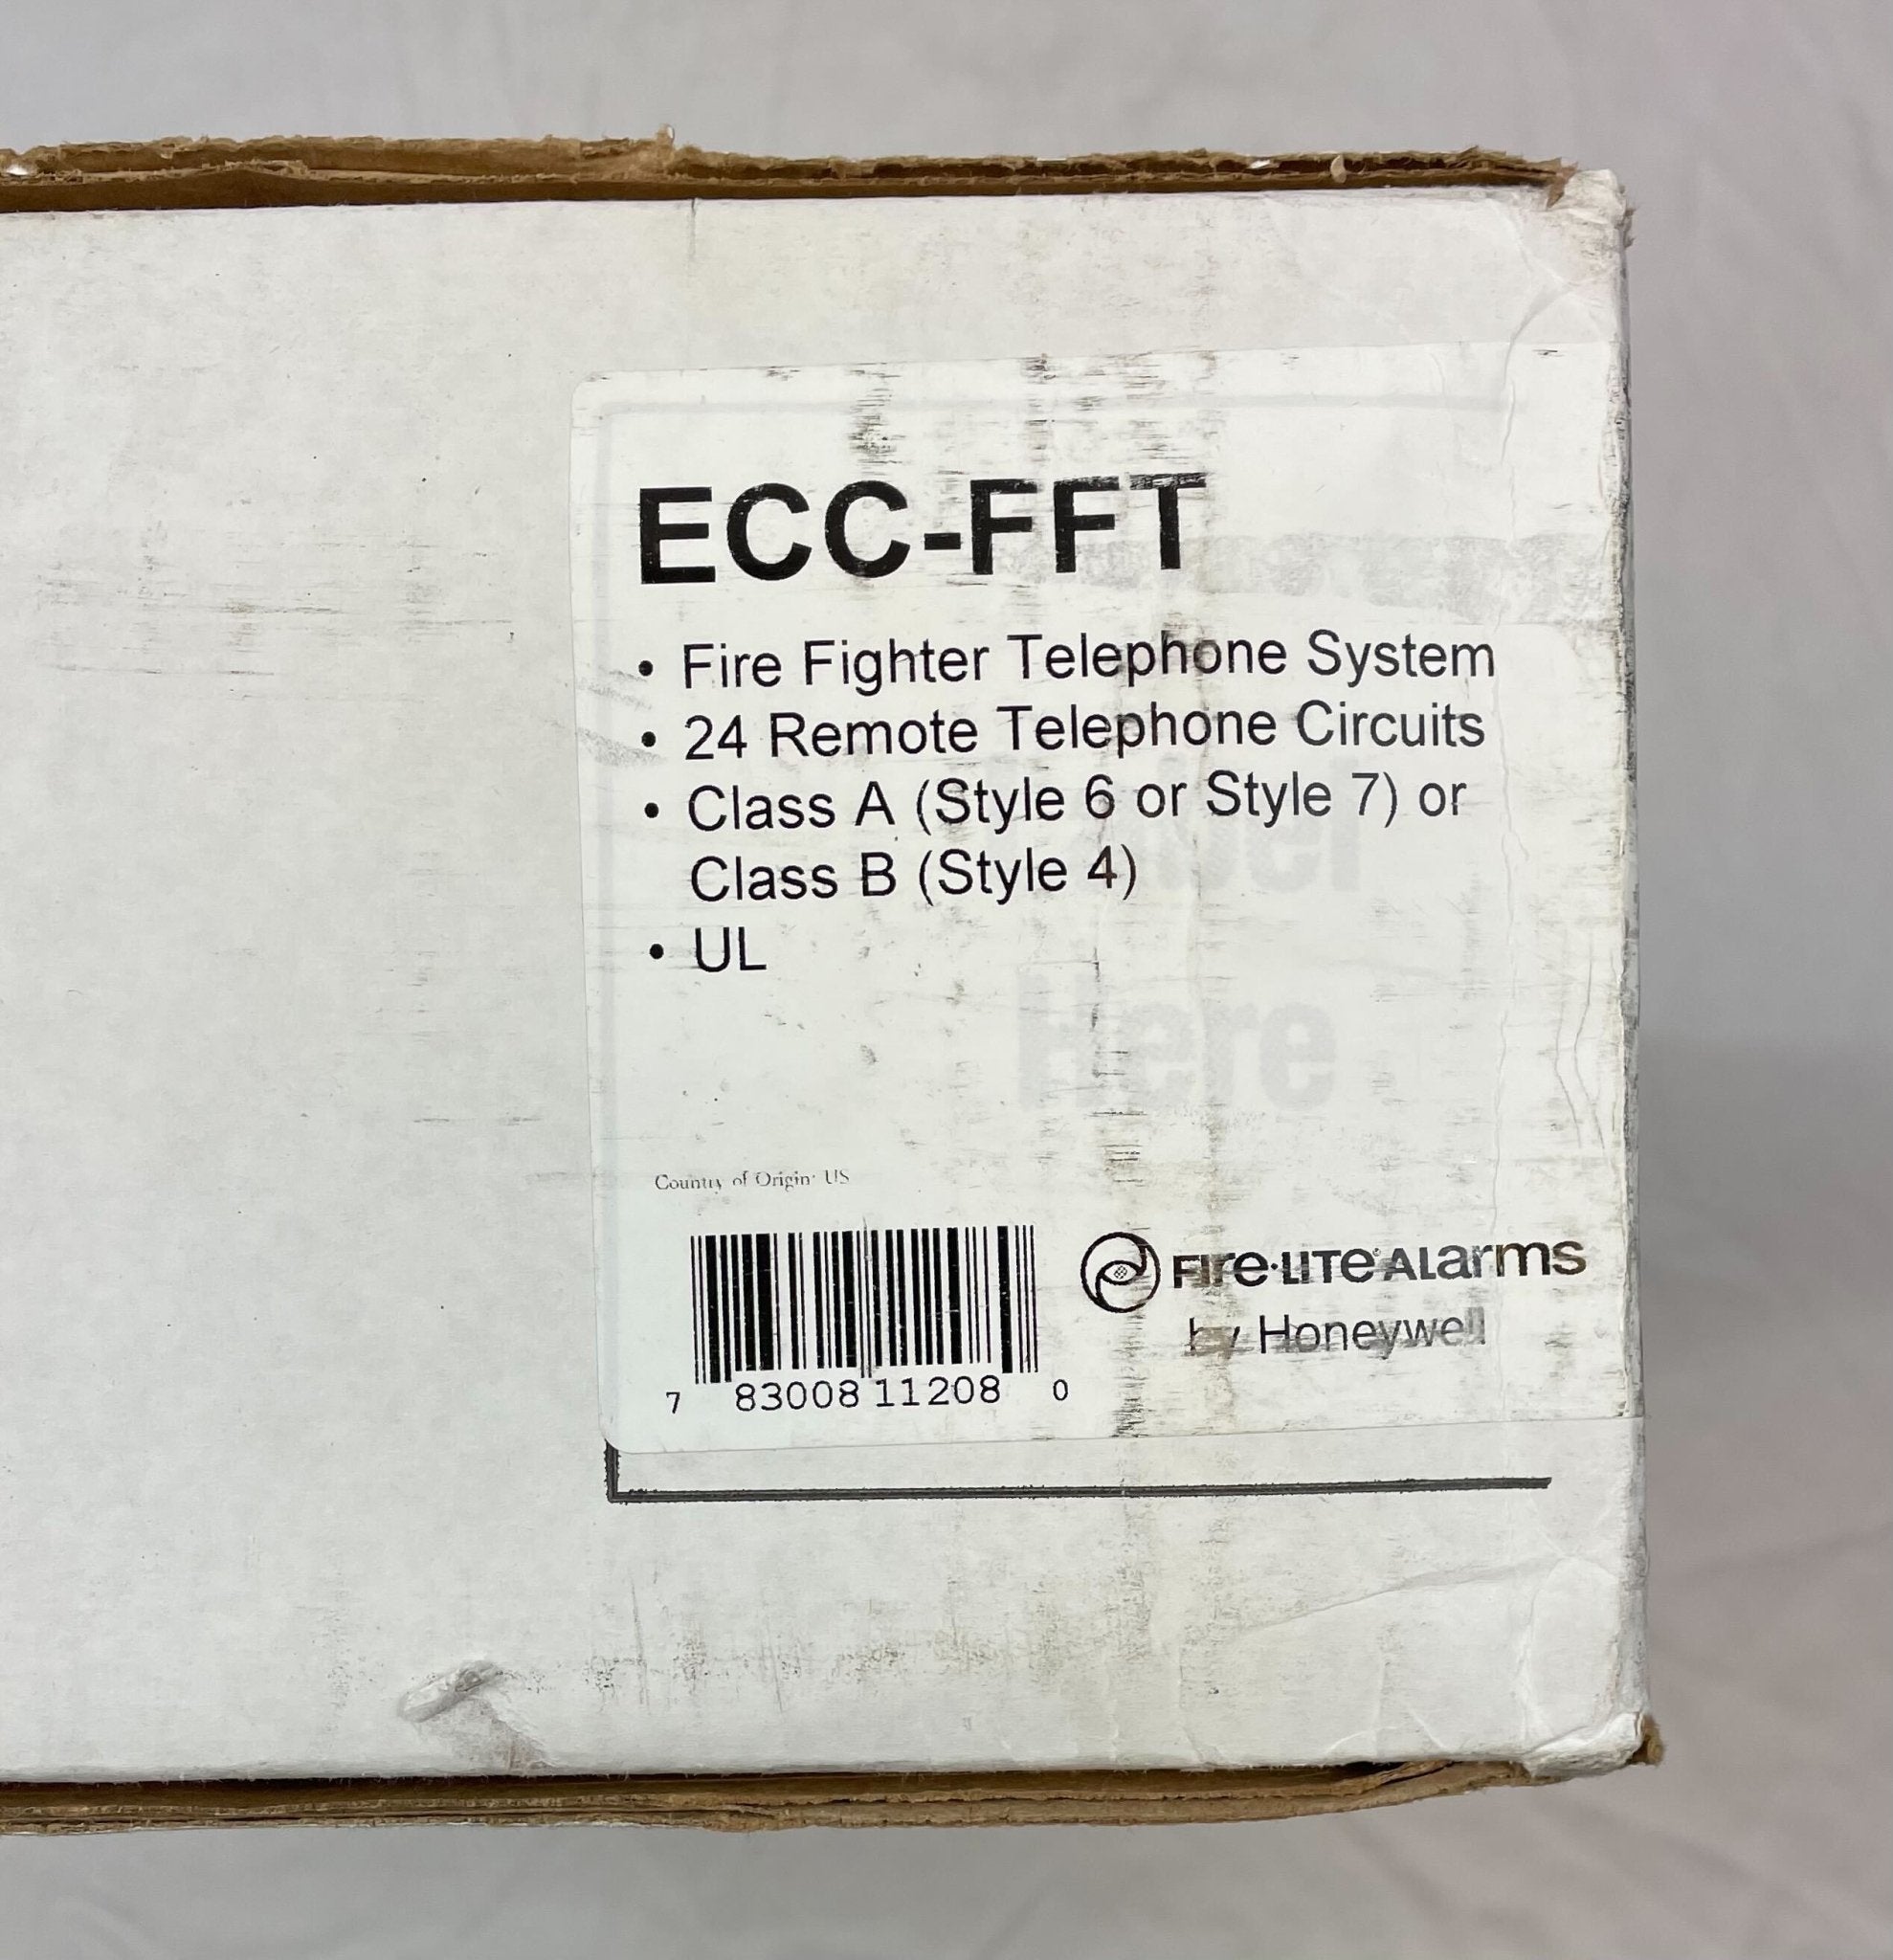 Firelite ECC-FFT - The Fire Alarm Supplier